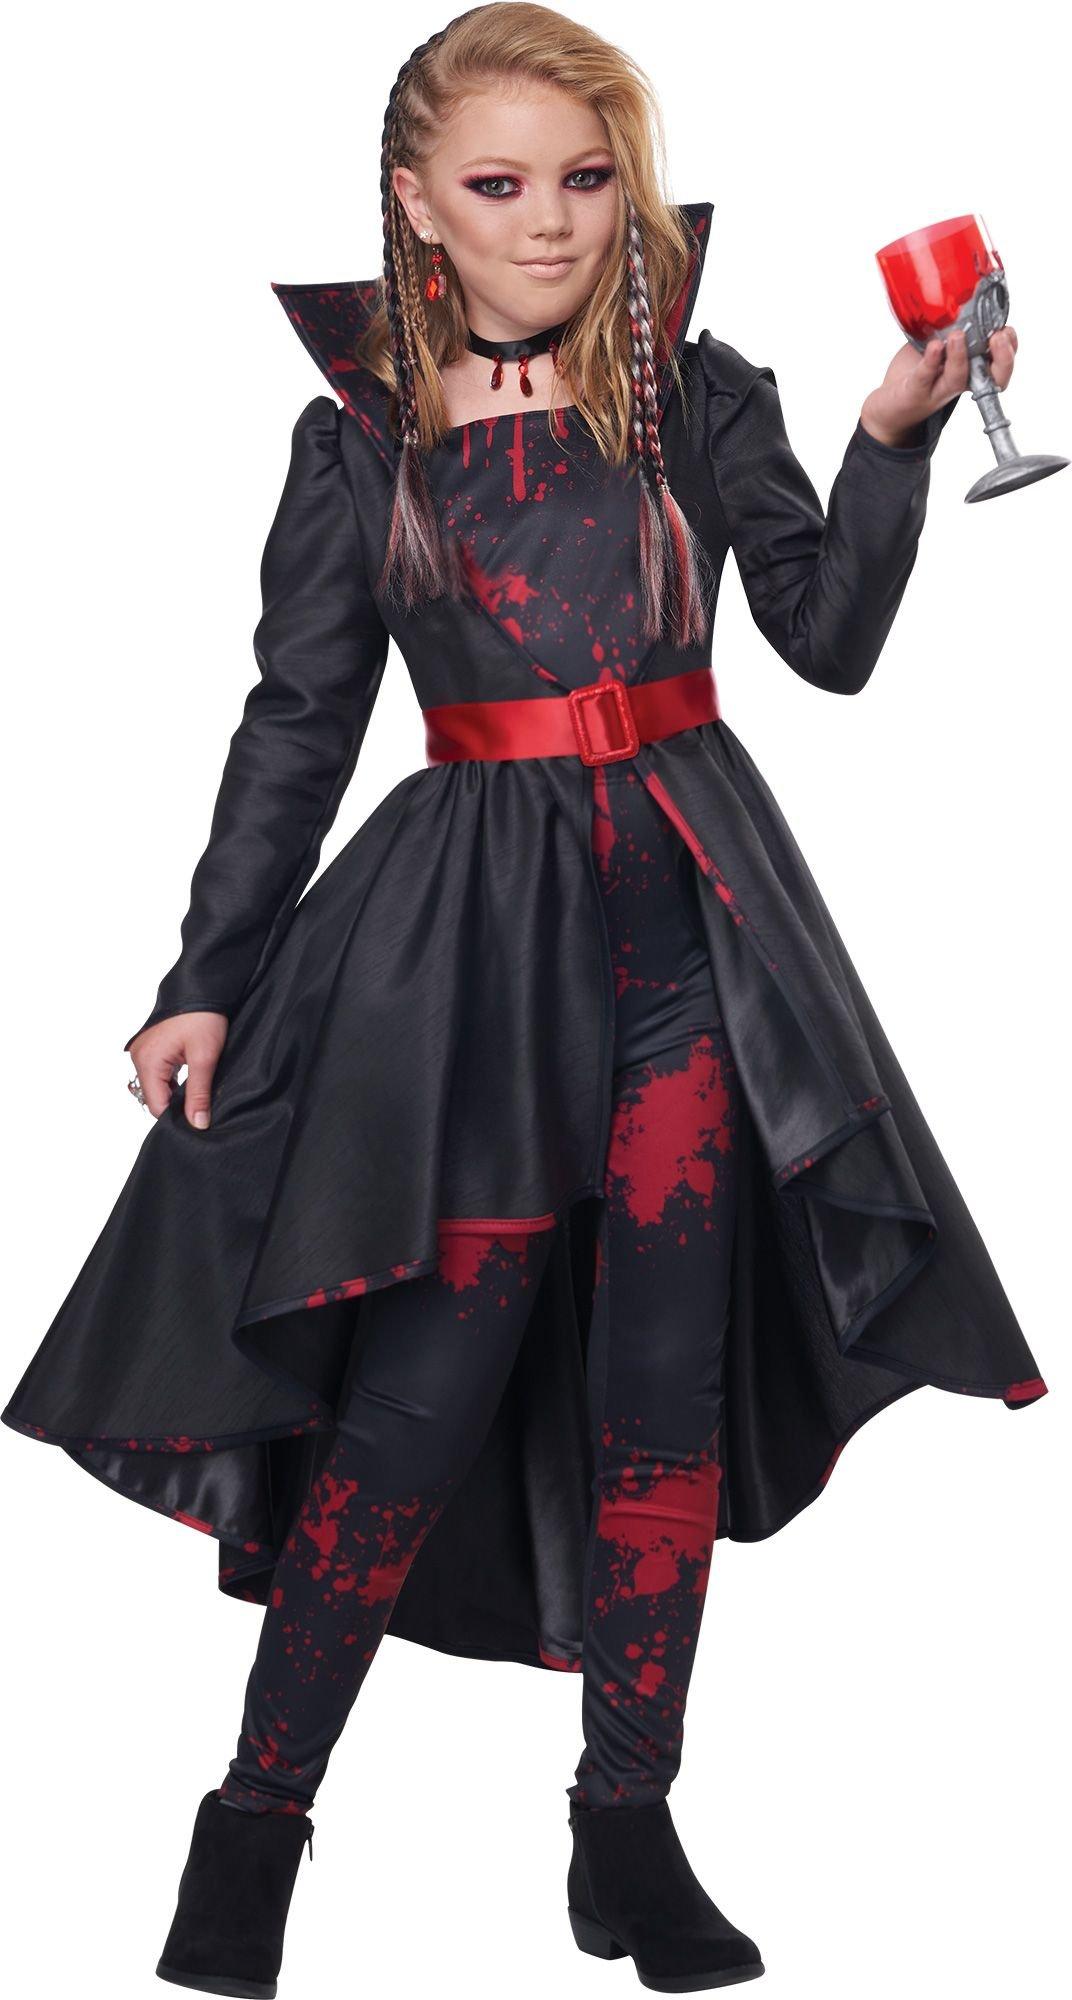 Kids' Bad Blood Vampire Costume